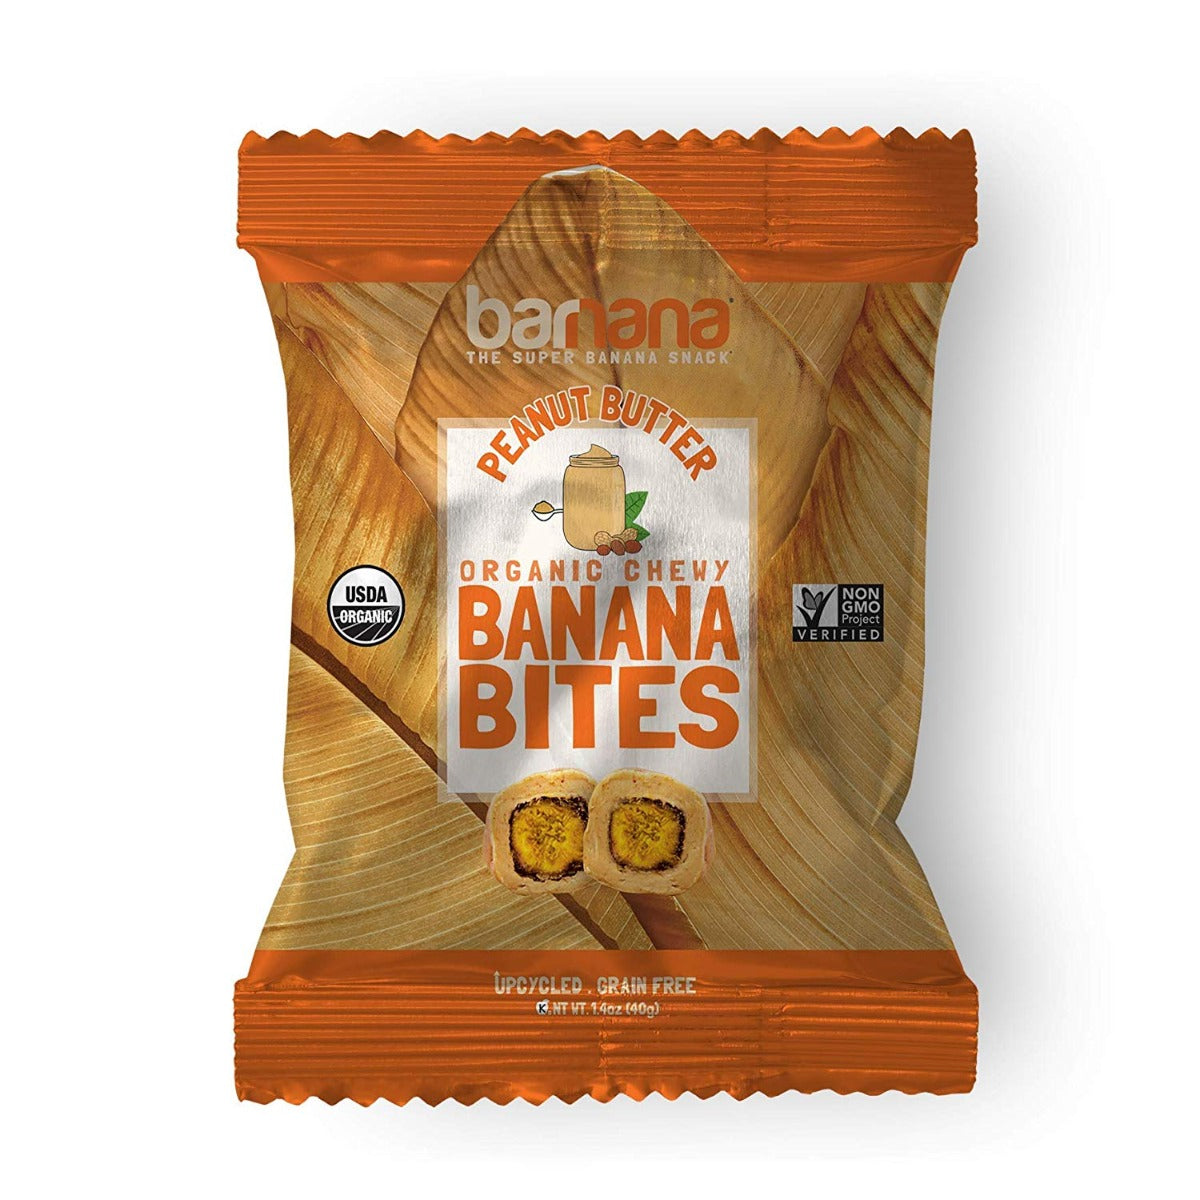 BARNANA: Organic Peanut Butter Chewy Banana Bites, 1.4 oz